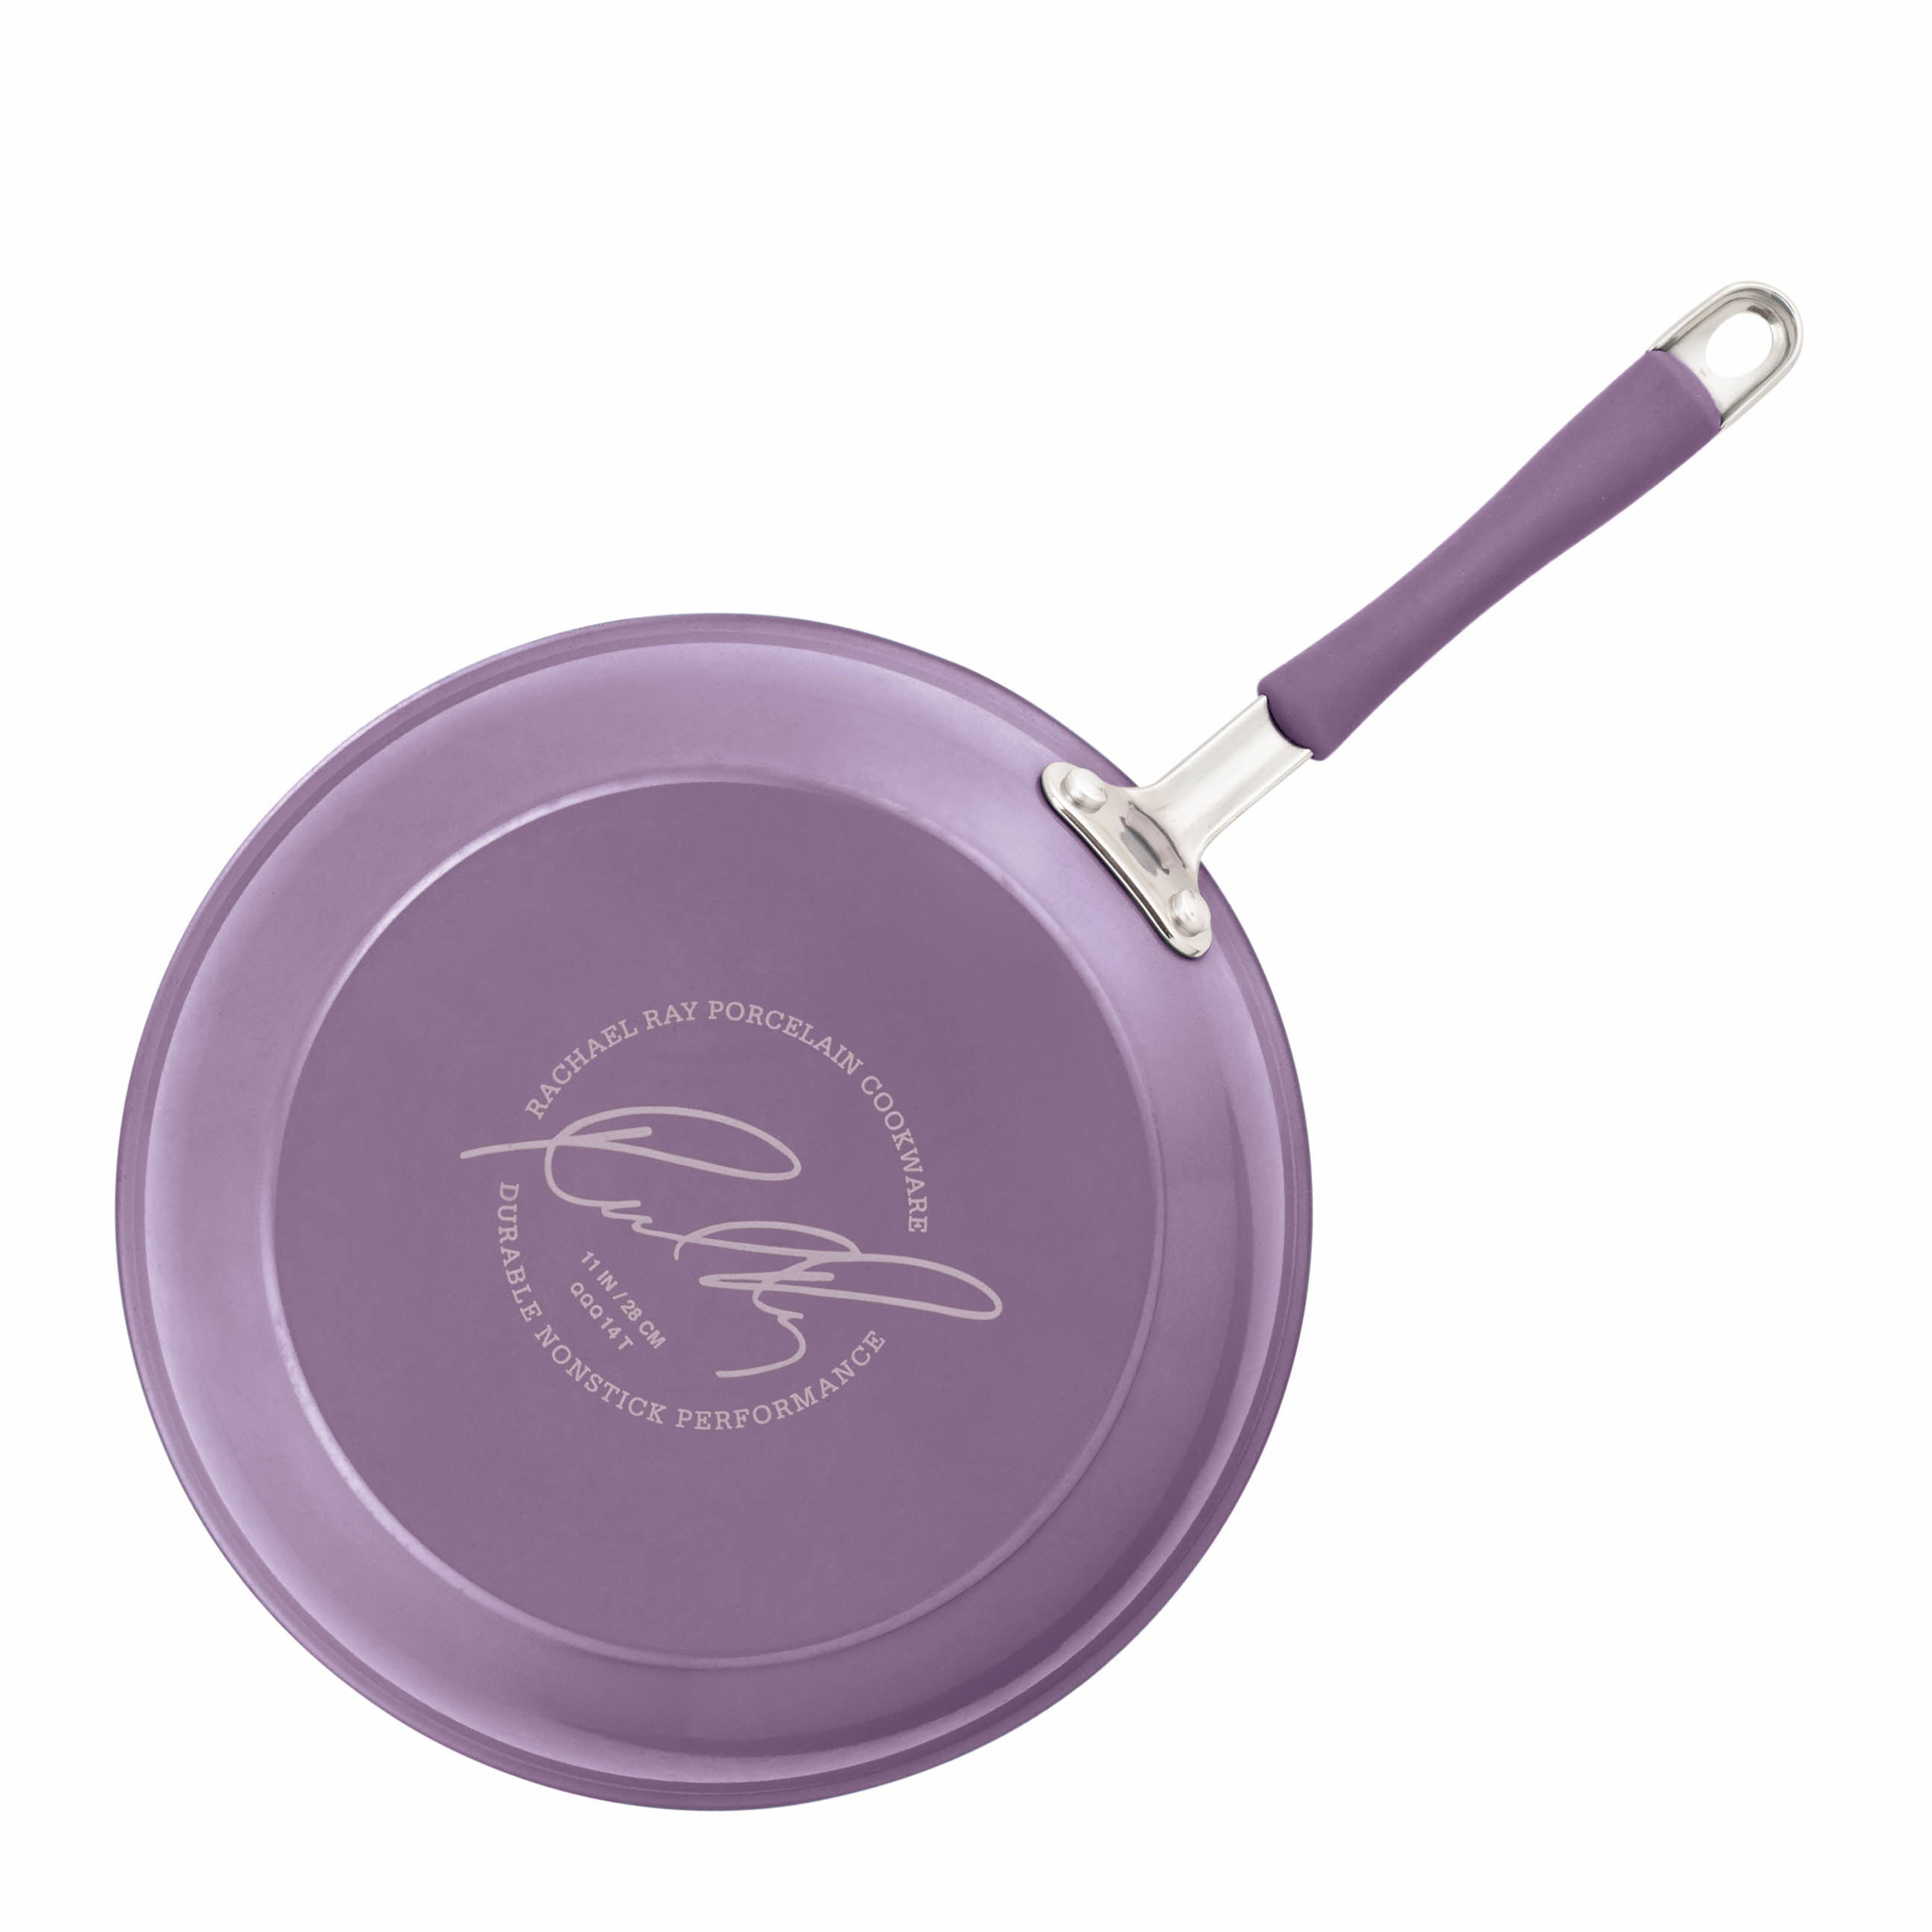 https://ak1.ostkcdn.com/images/products/10108095/Rachael-Ray-Cucina-Hard-Enamel-Nonstick-12-Piece-Cookware-Set-Lavender-Purple-231b4eb4-ff4f-4e47-8b3a-bd054b1c7131.jpg